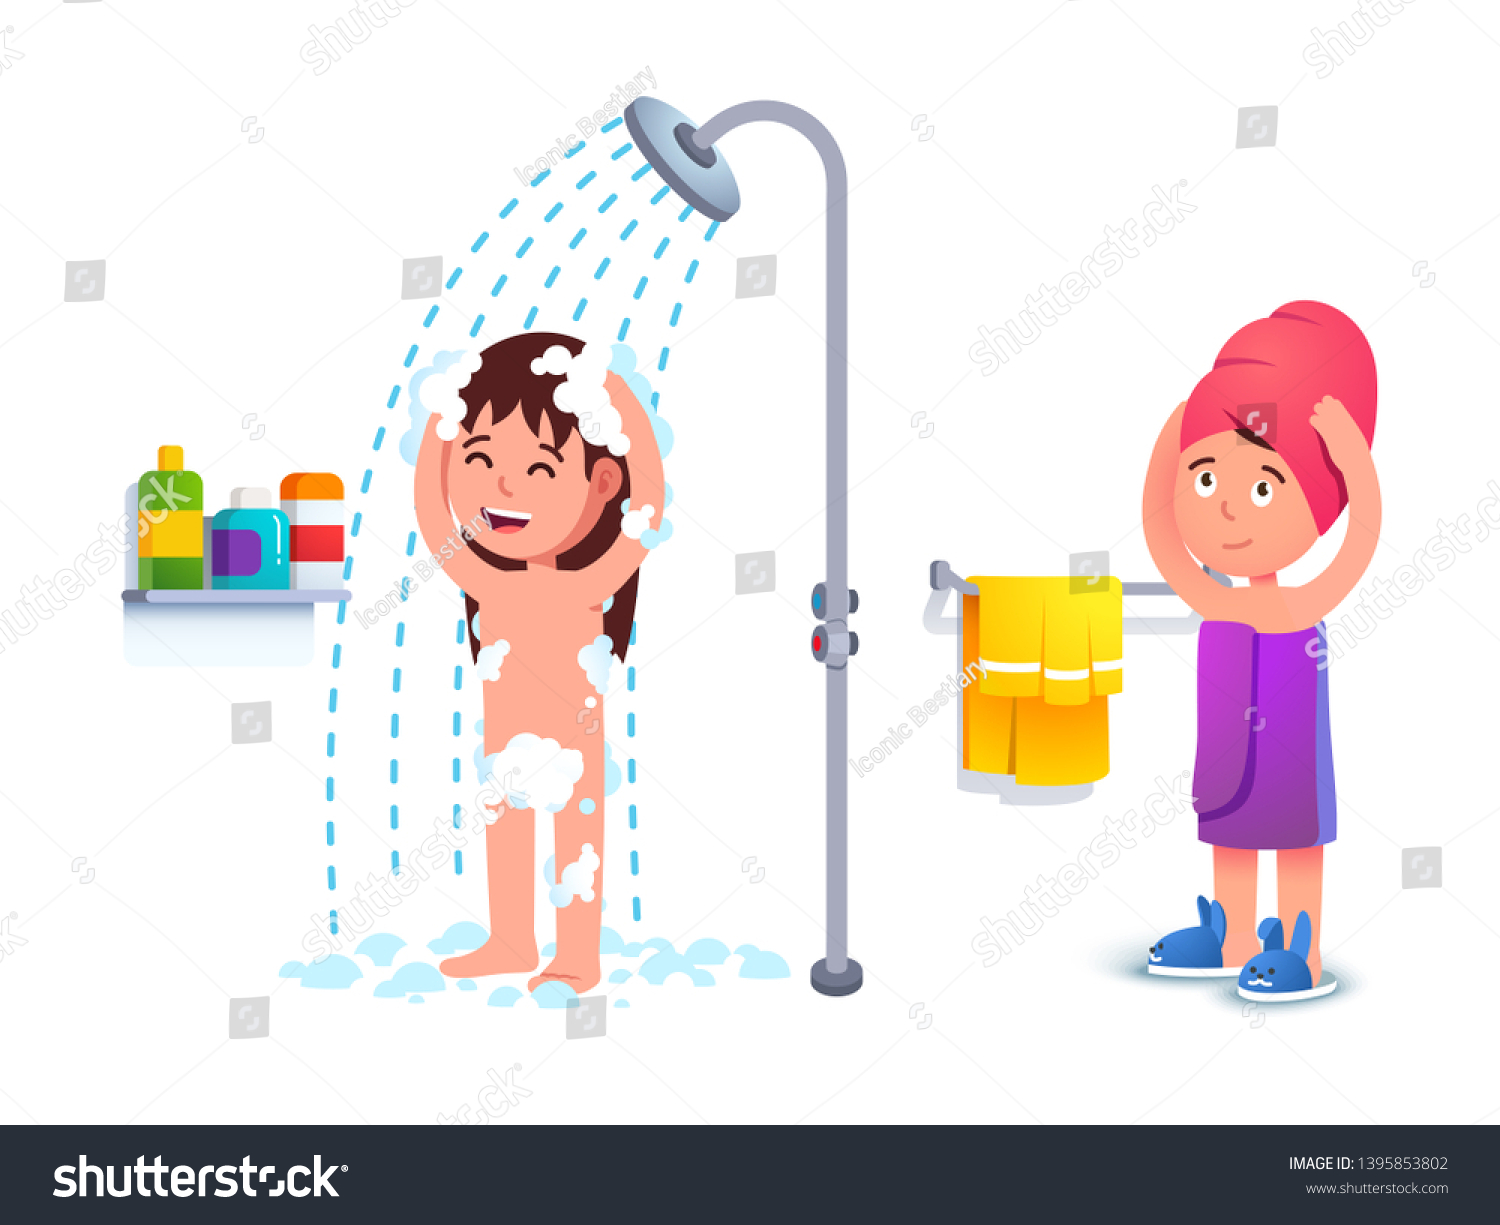 Towel times shower